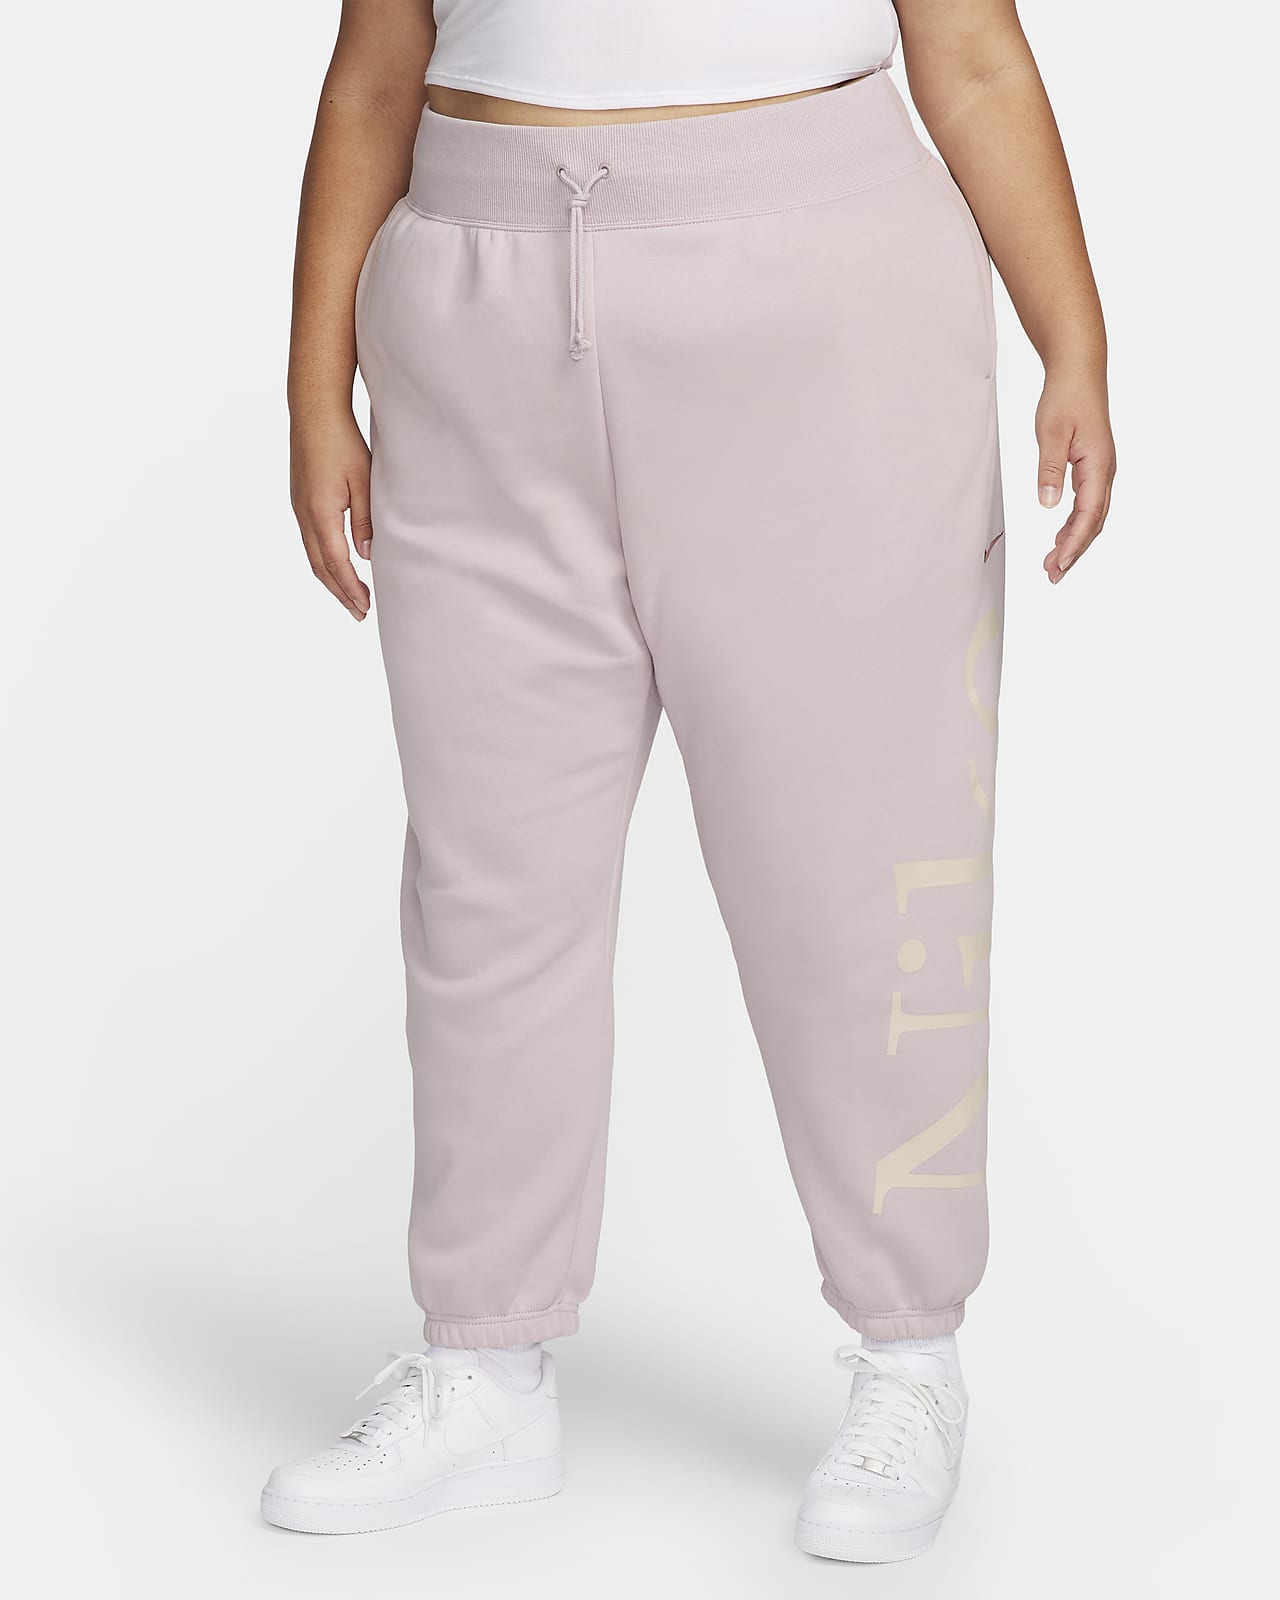 Nike Sportswear Phoenix Fleece Pantalons de xandall oversized amb logotip (Talles grans) - Dona